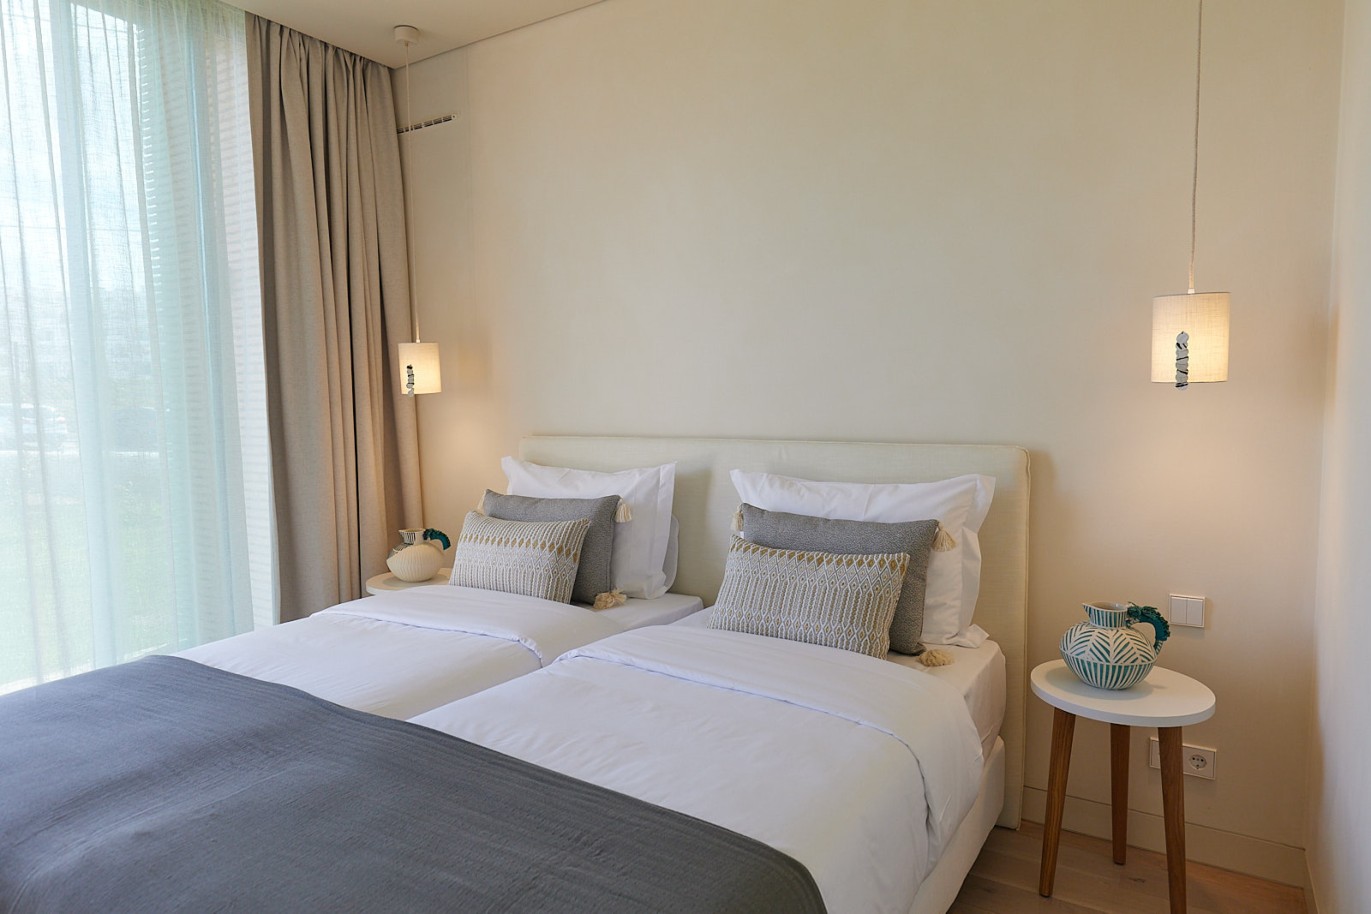 2 bedroom apartment in resort, for sale in Porches, Algarve_228890